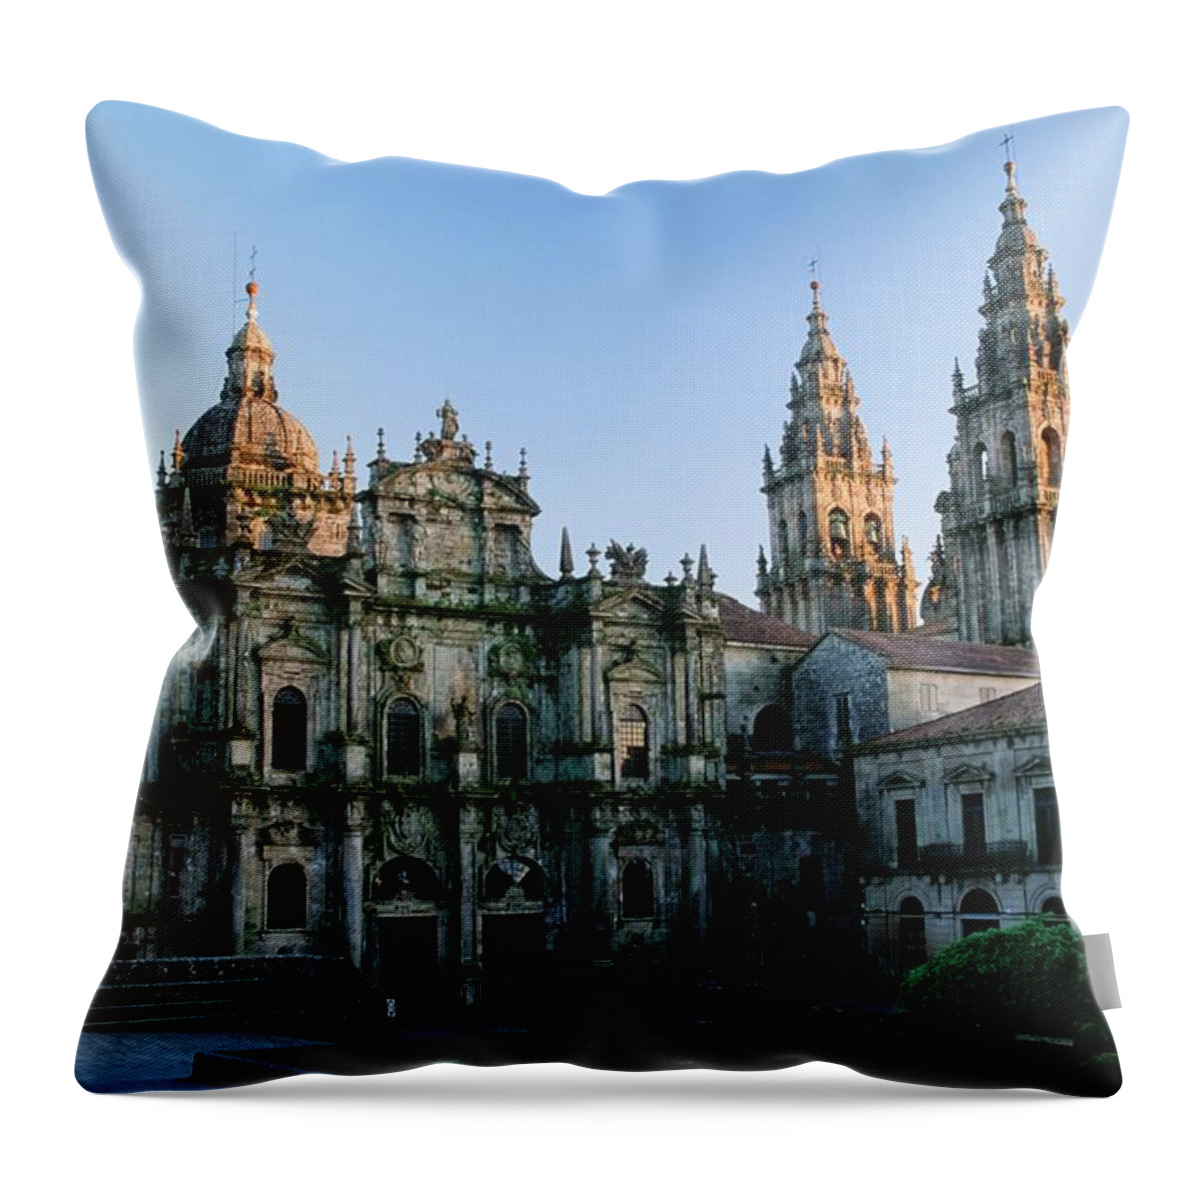 Catalonia Throw Pillow featuring the photograph Santiago De Compostela Cathedral by Design Pics